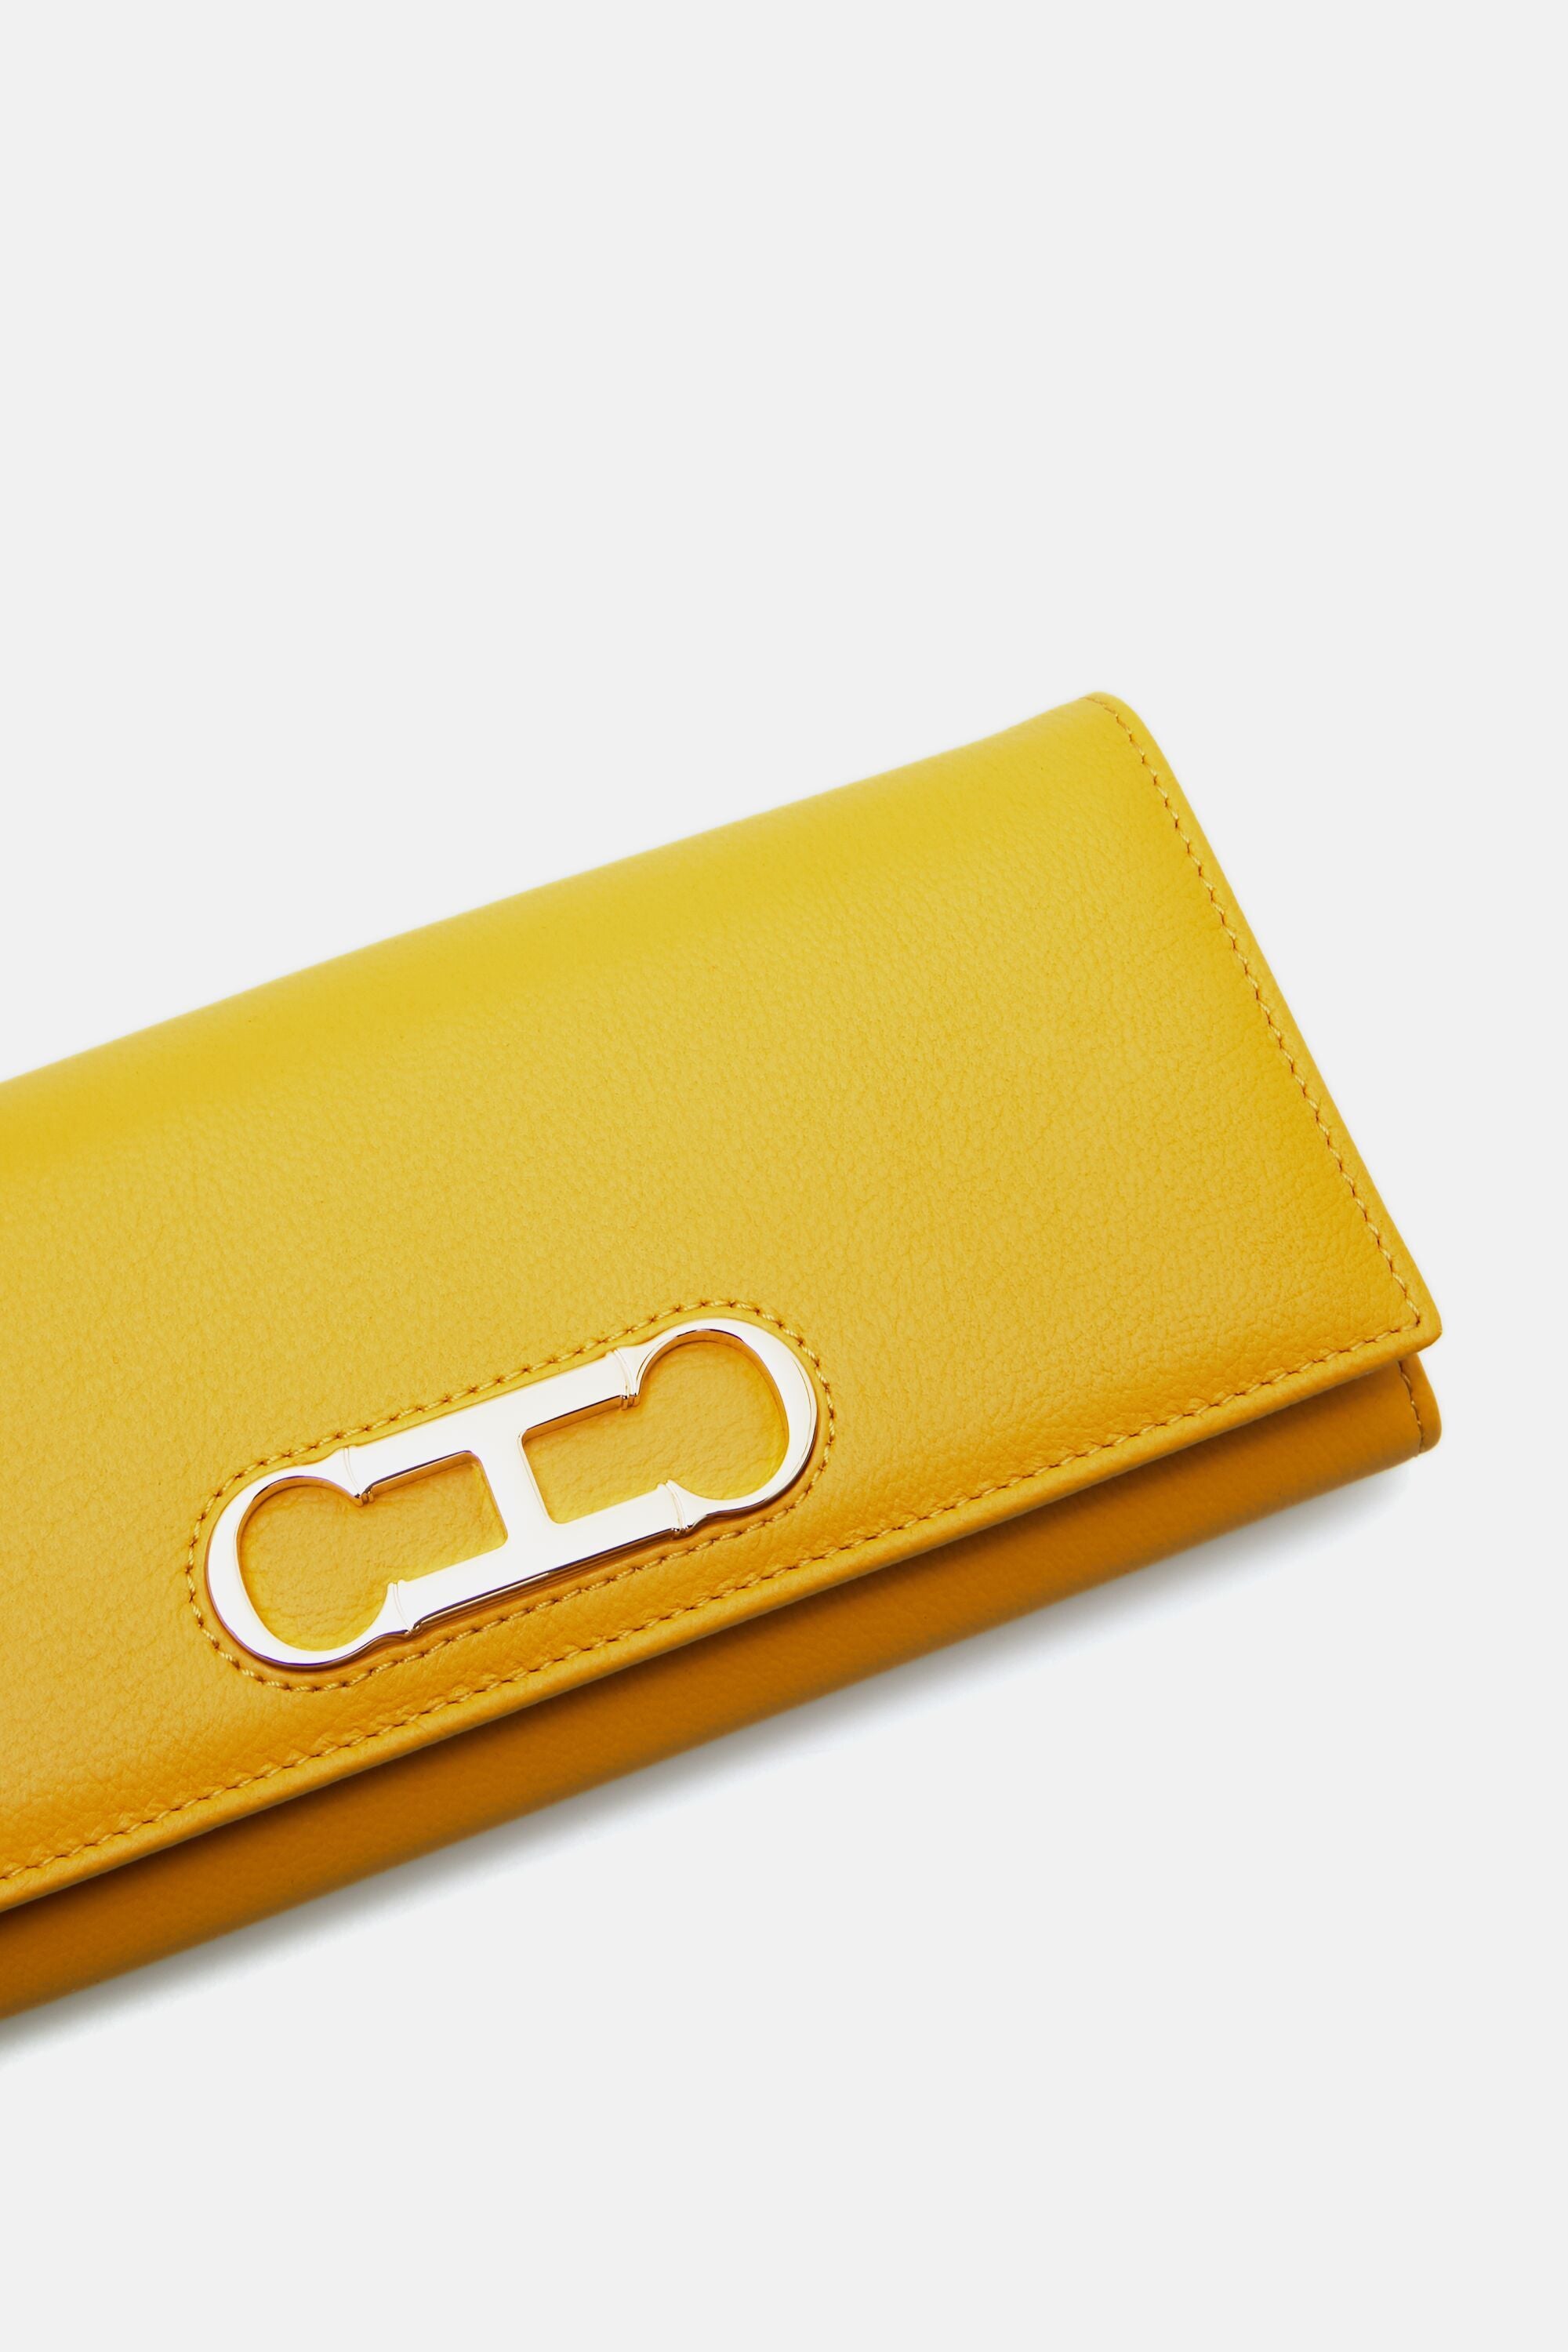 Salvatore Ferragamo Metallic Gold Continental Flap Wallet One Size